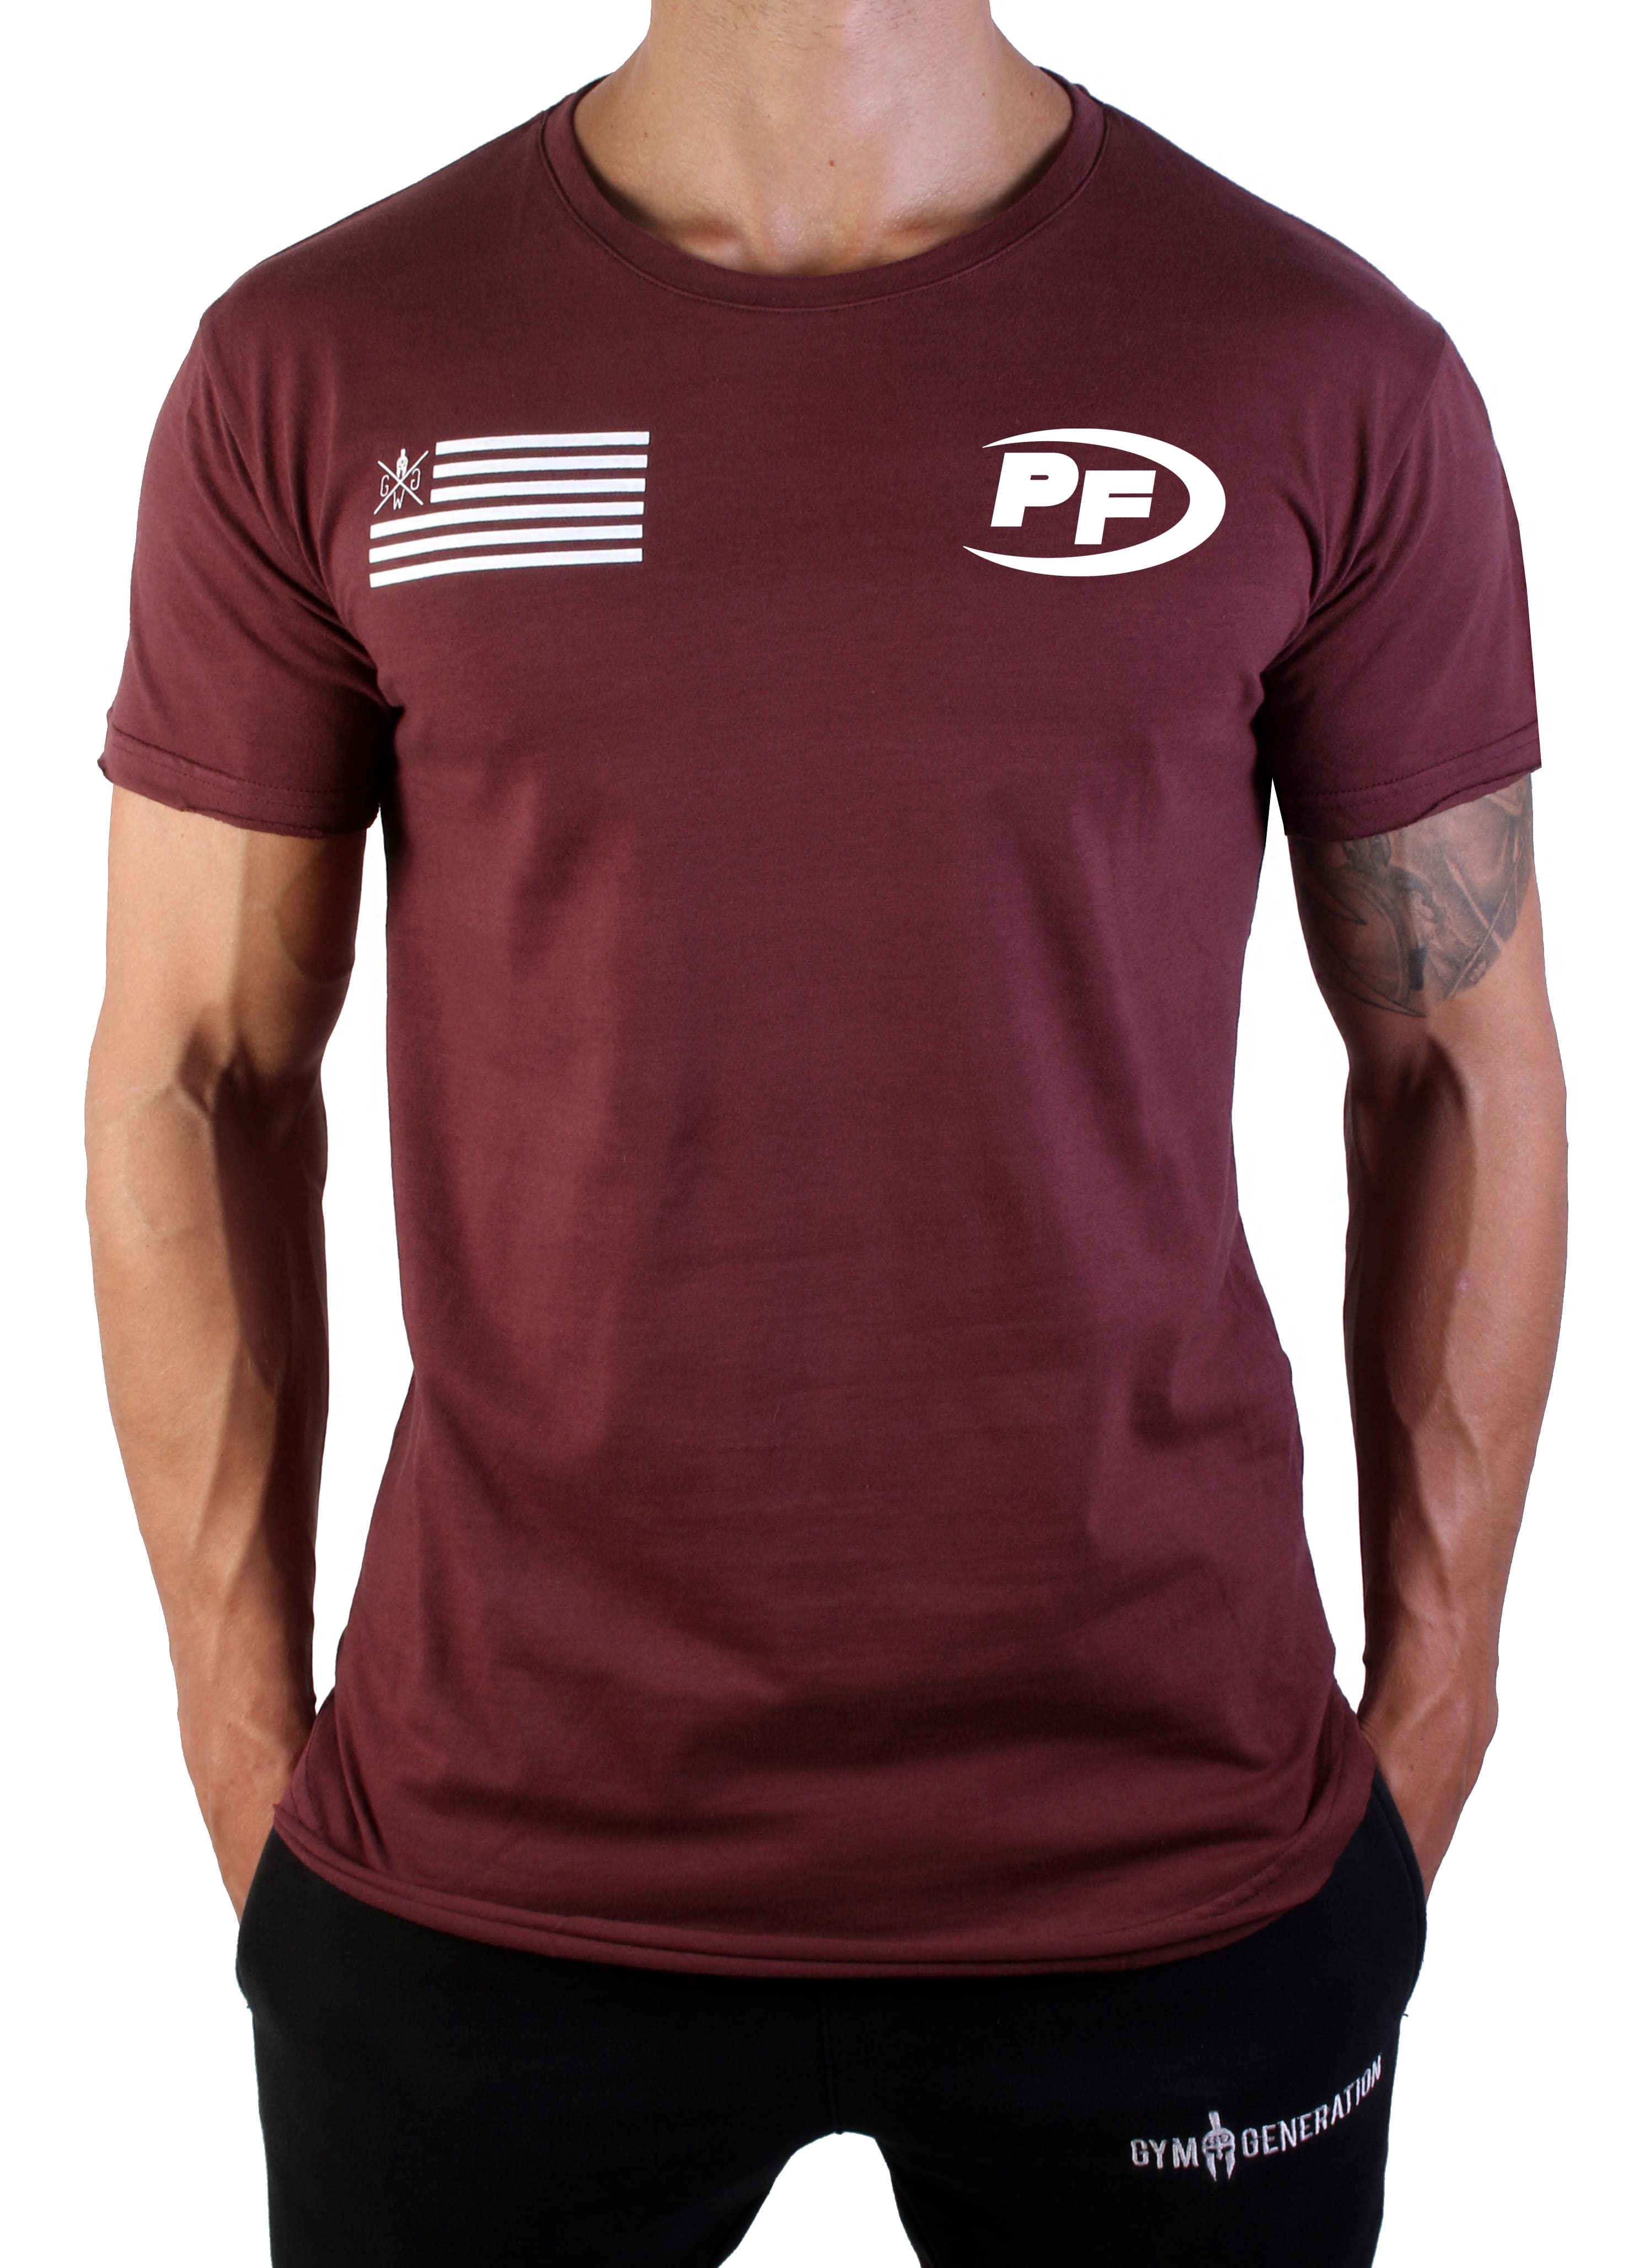 PowerFood Prime Shirt BURGUNDY by Gym Generation